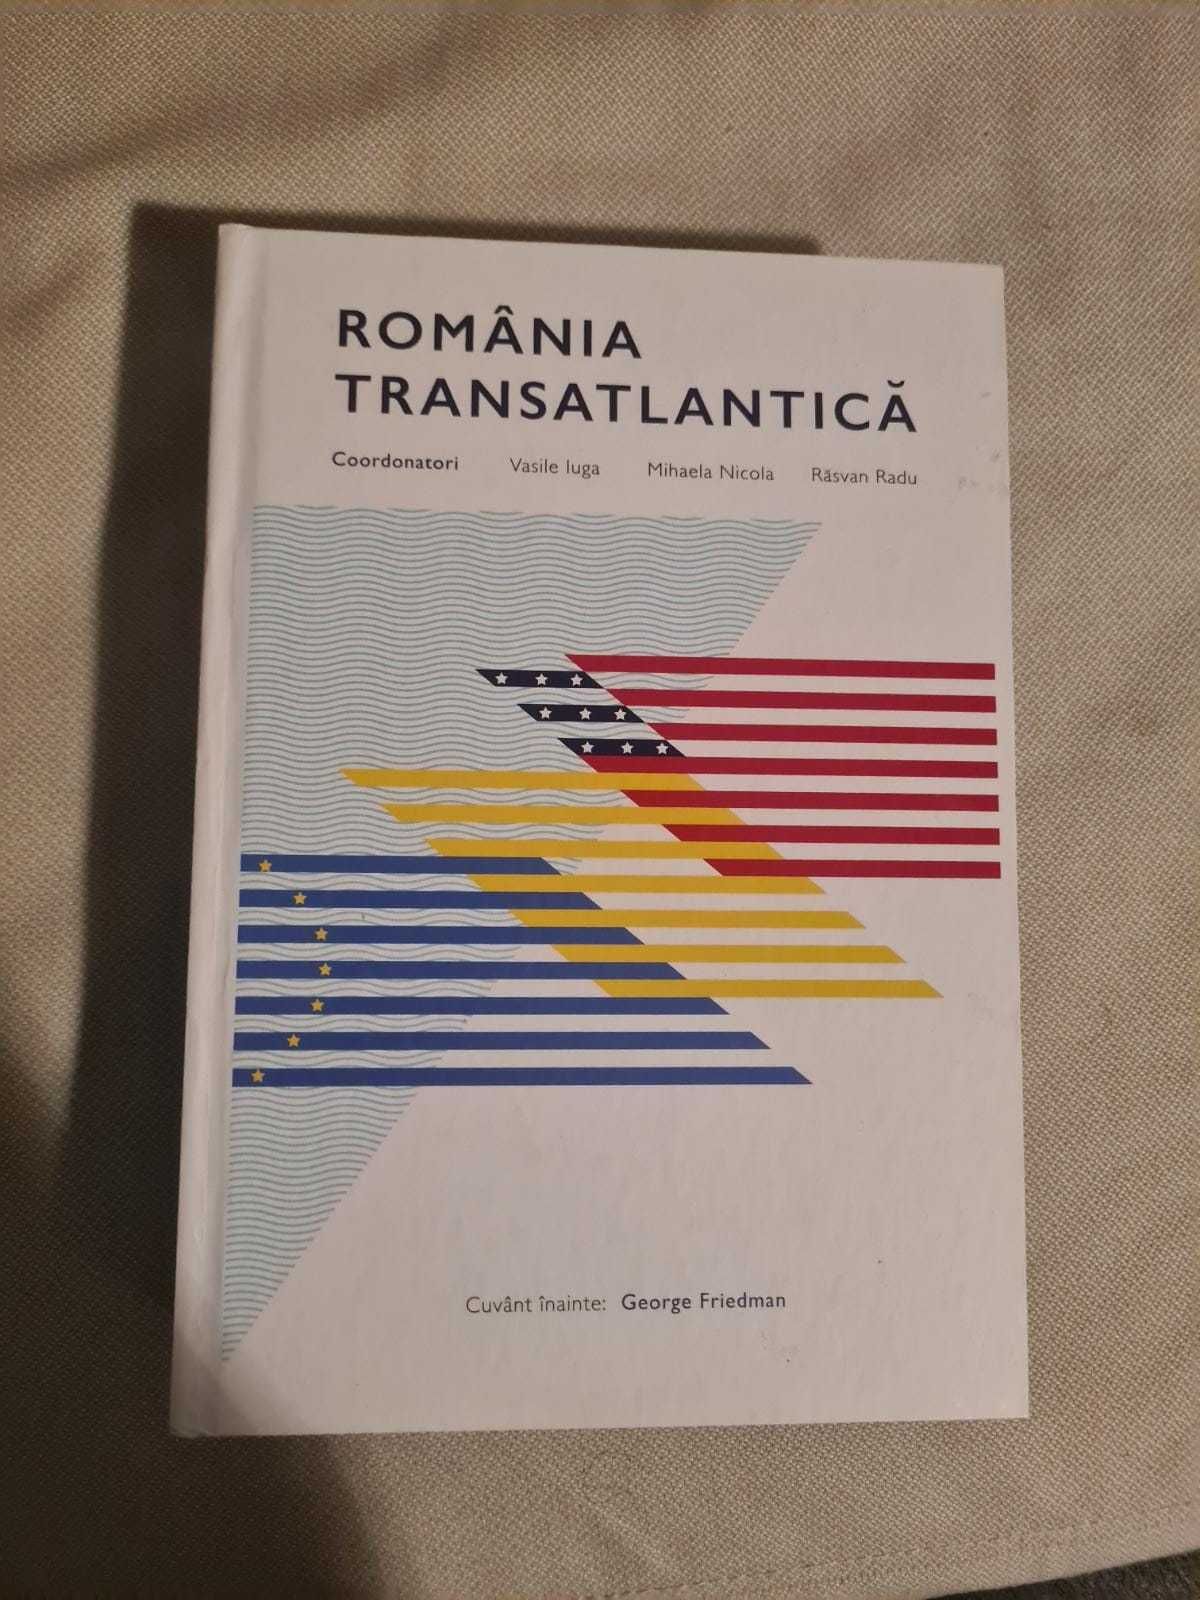 Romania transatlantica Vasile Iuga, Mihaela Nicola şi Răsvan Radu